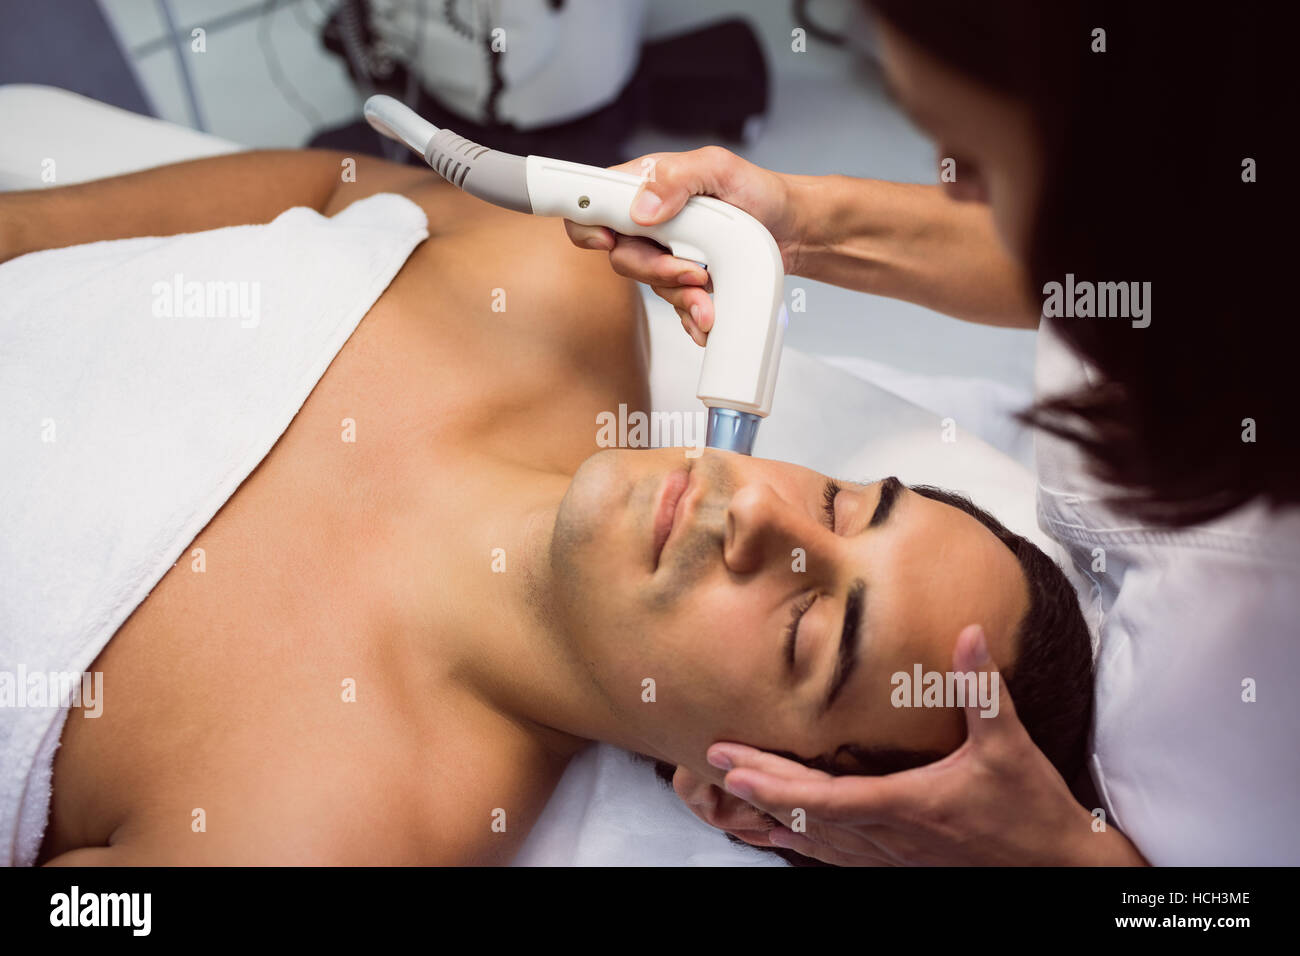 Patient receiving facial treatment Stock Photo